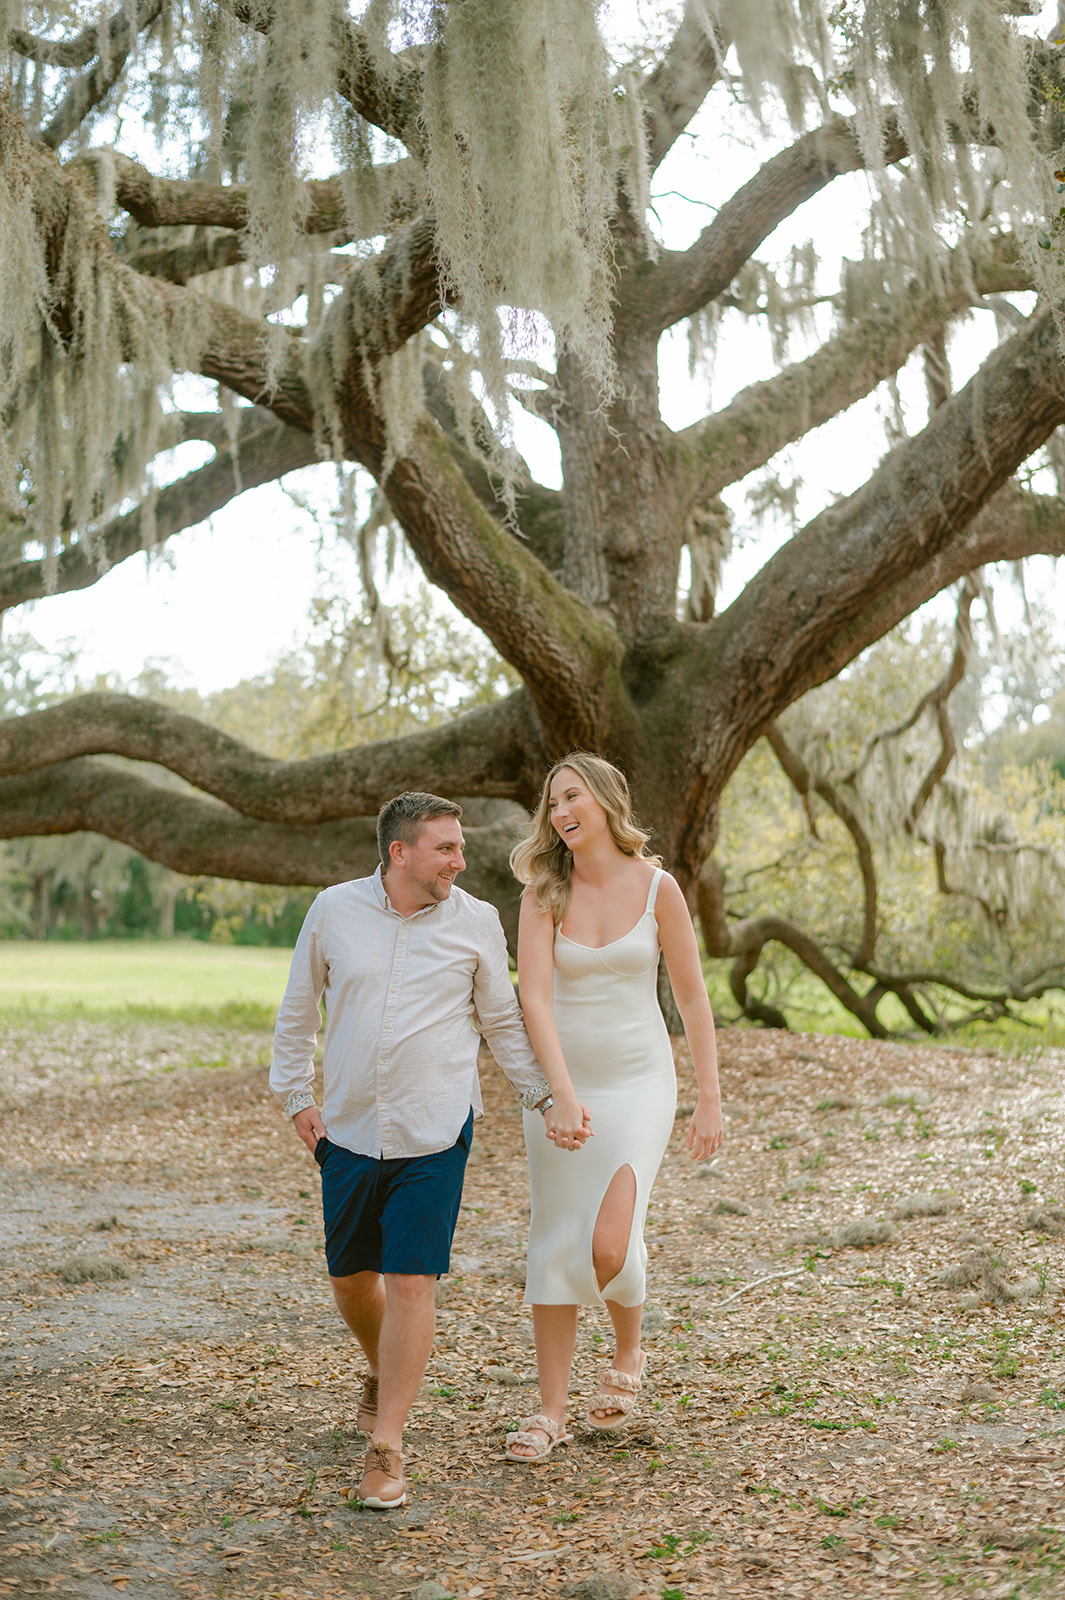 "Romantic engagement photo in Philippe Park, Tampa Florida"
